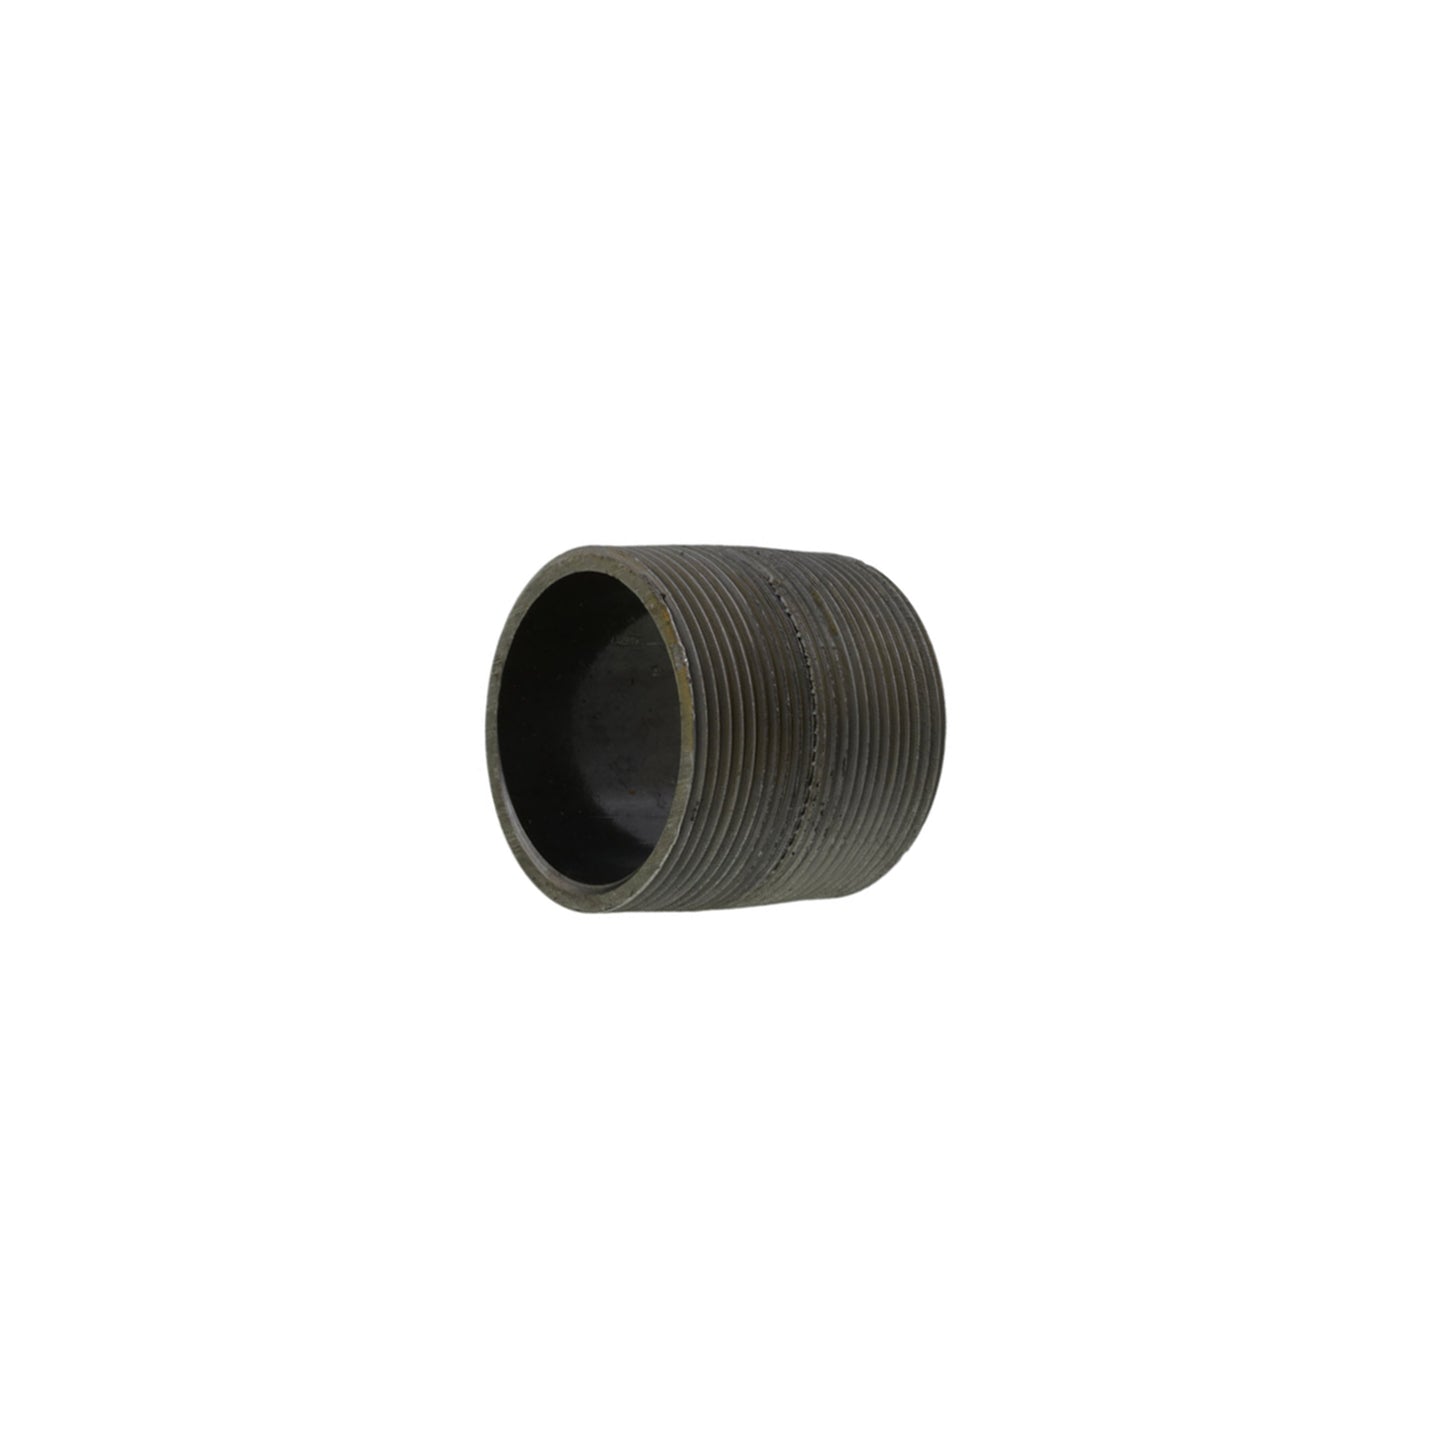 NXBS08CL - Schedule 80 Black Seamless Steel Pipe Nipple - 2" X Close